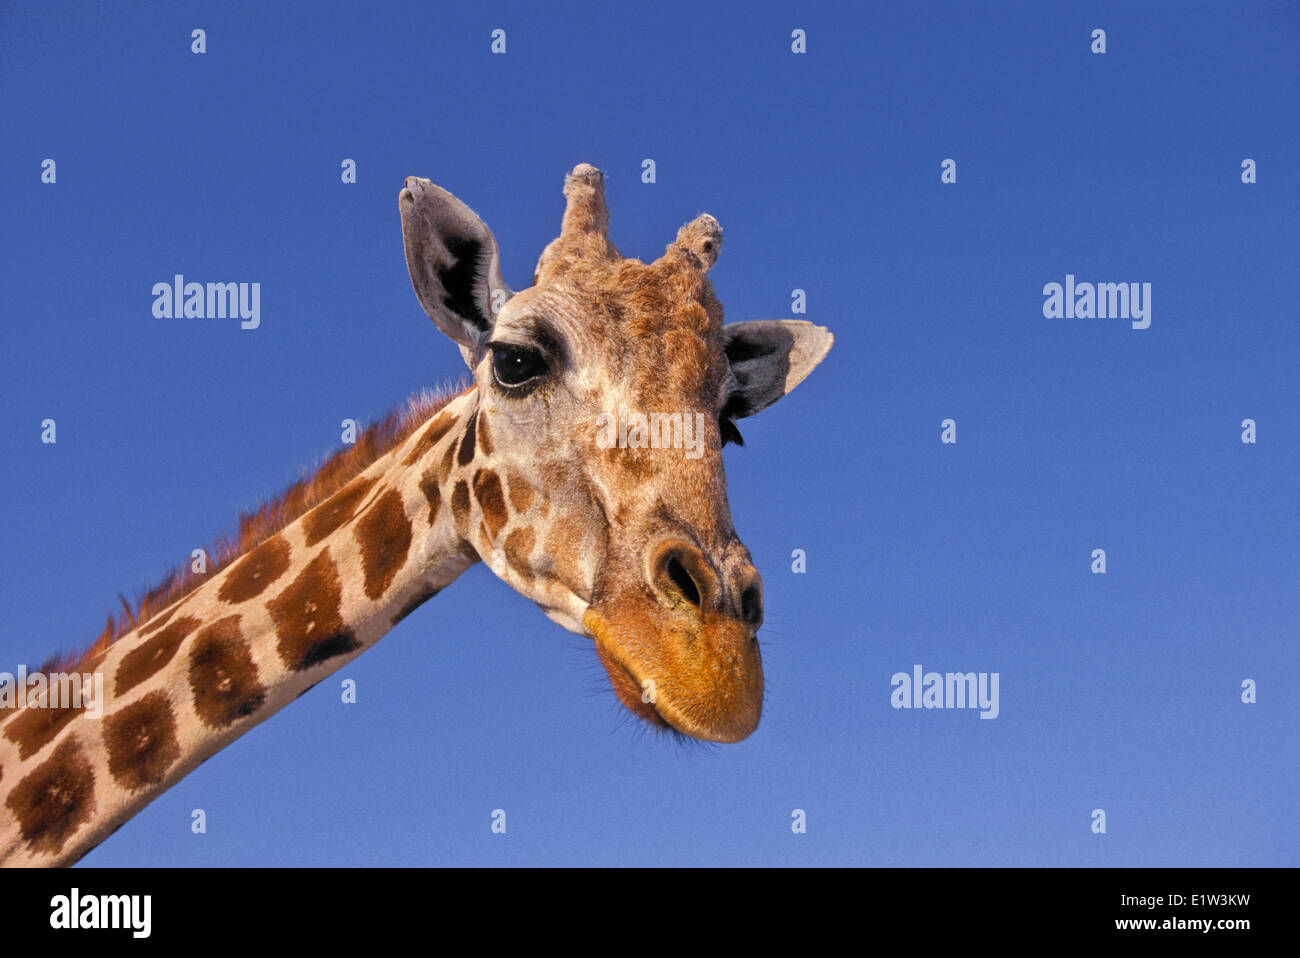 Masai Giraffe (Giraffa camelopardalis tippelskrichi) found in Kenya and Tanzania. The tallest land mammal in the world. Stock Photo